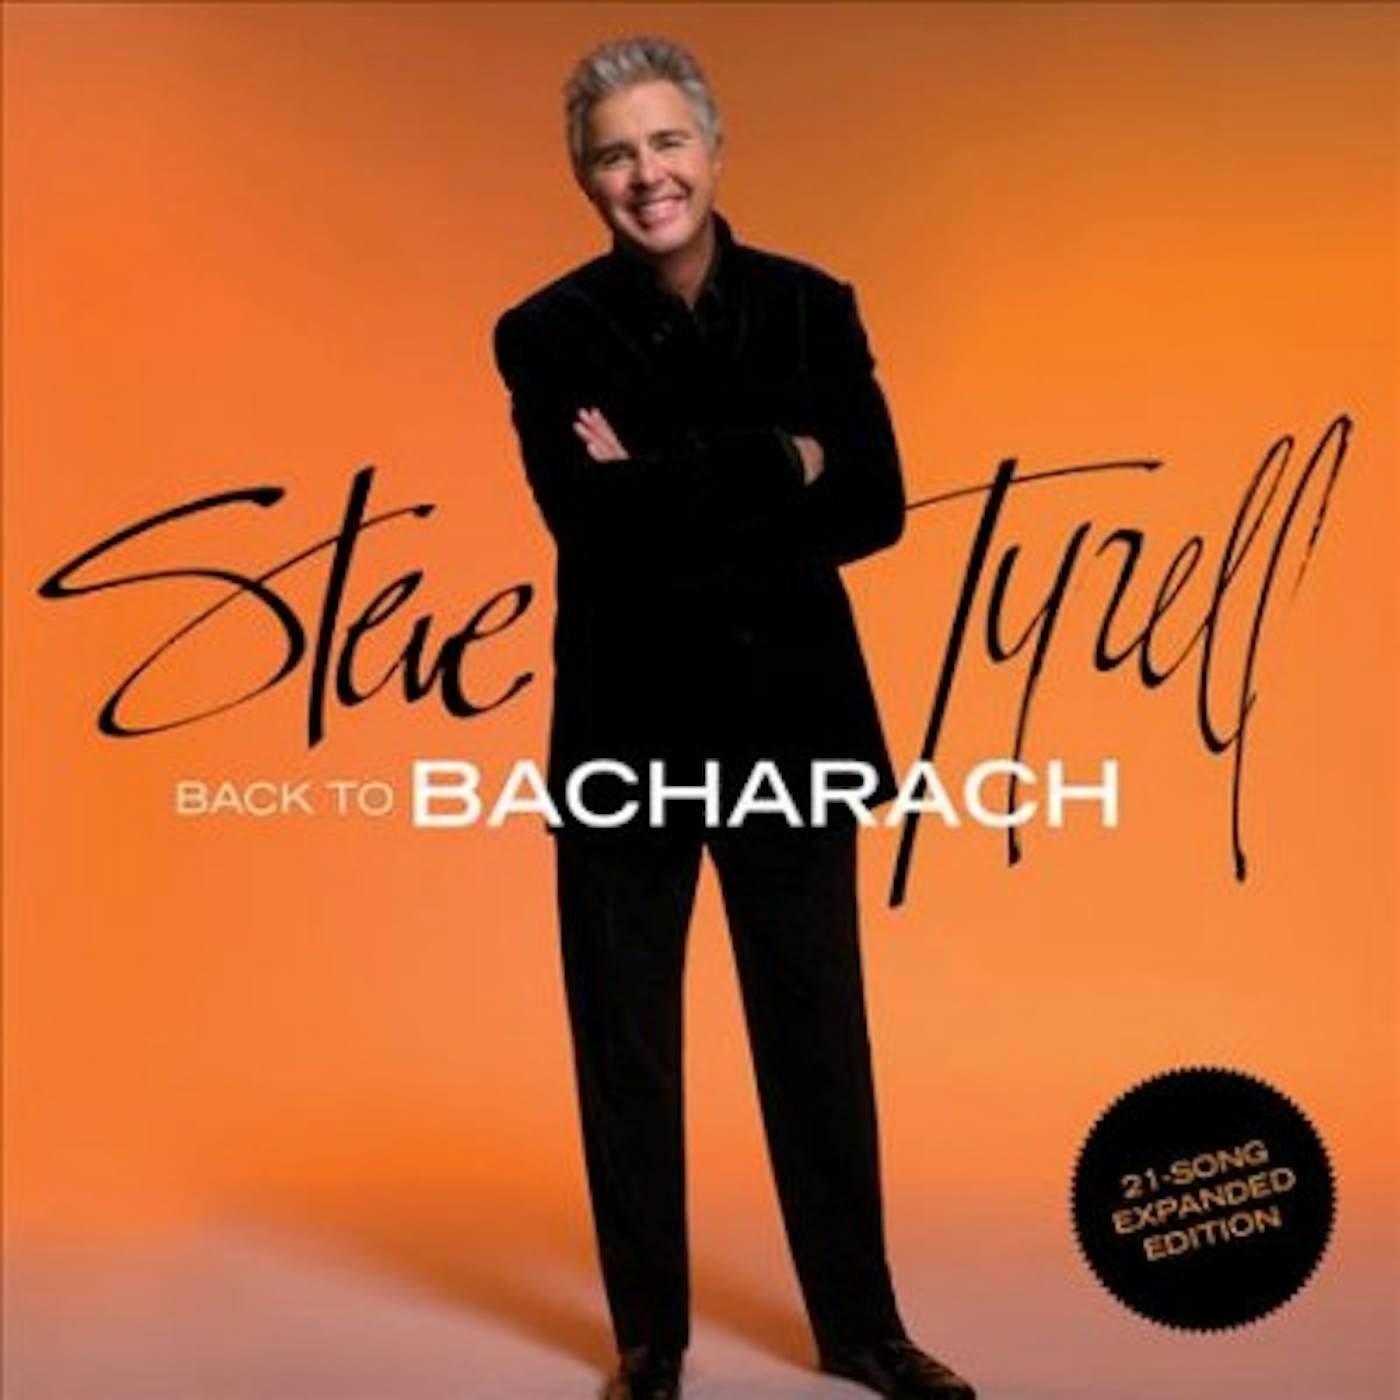 Steve Tyrell Back to Bacharach (Expanded) CD